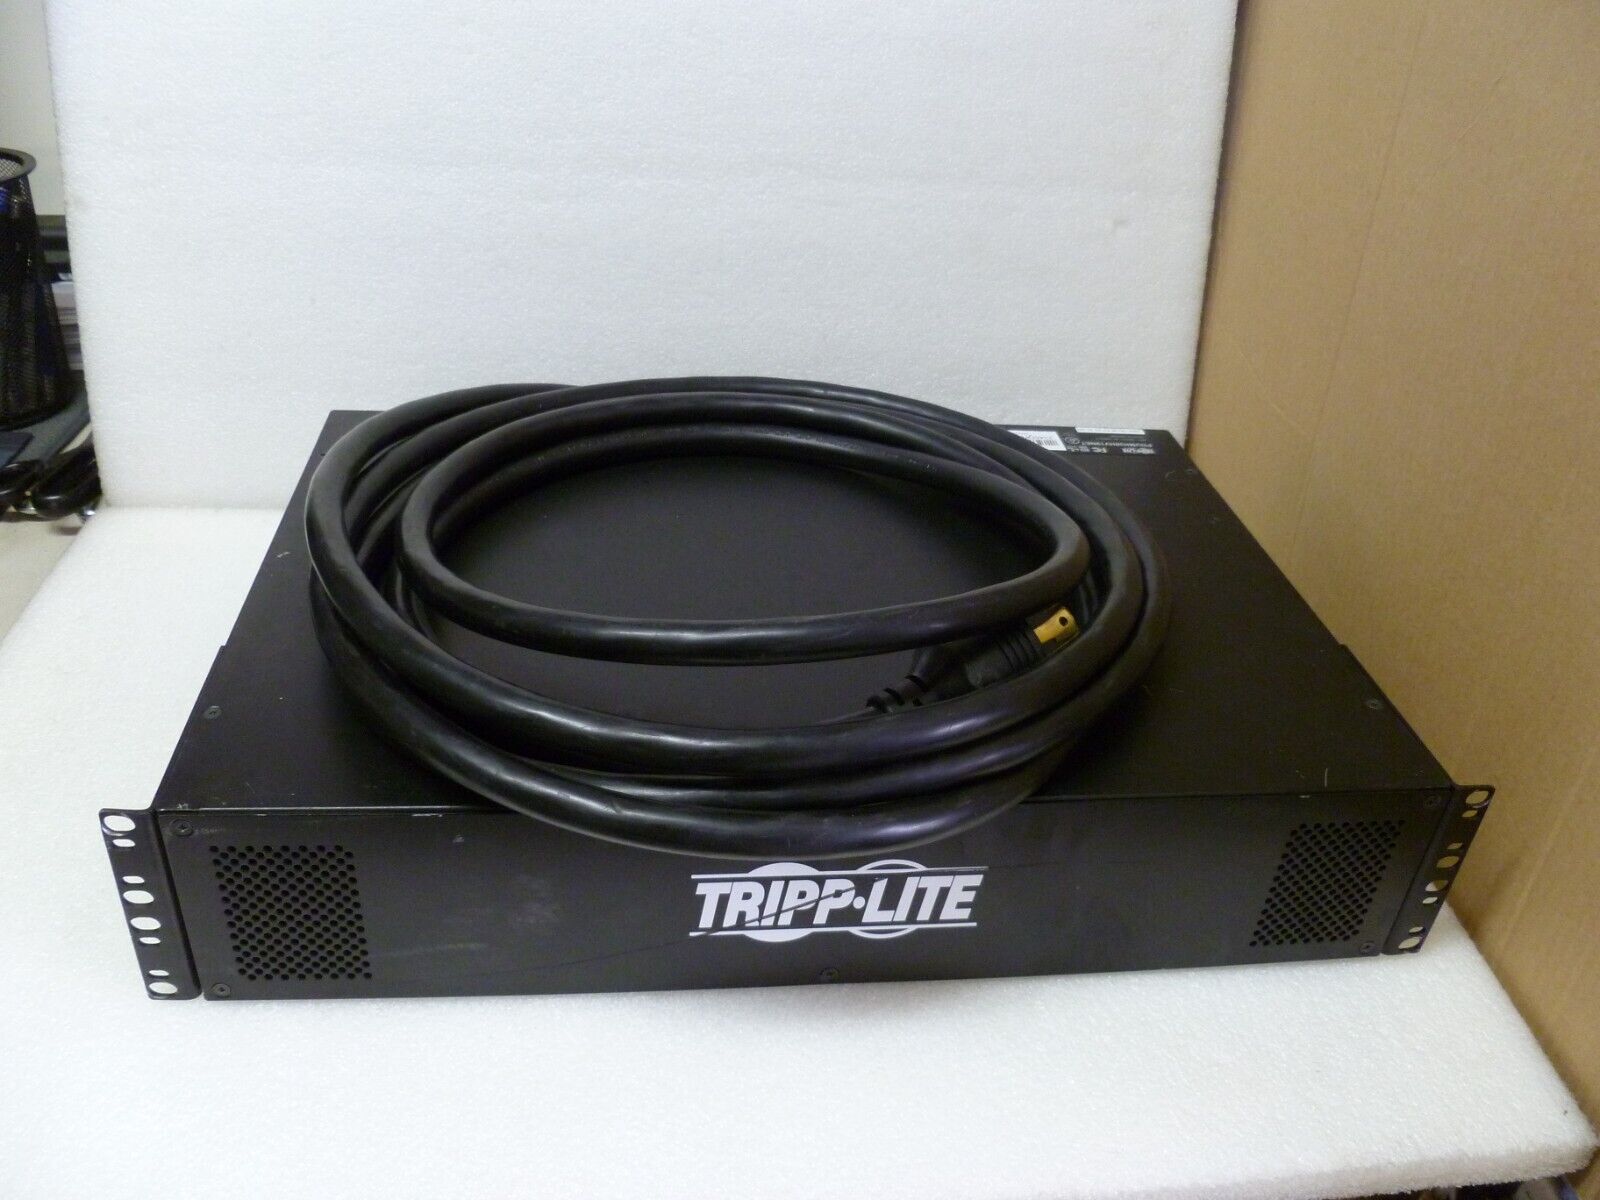 TRIPP-LITE PDUMH30HV19NET 208/230V 24A 50/60Hz Monitored Switched PDU